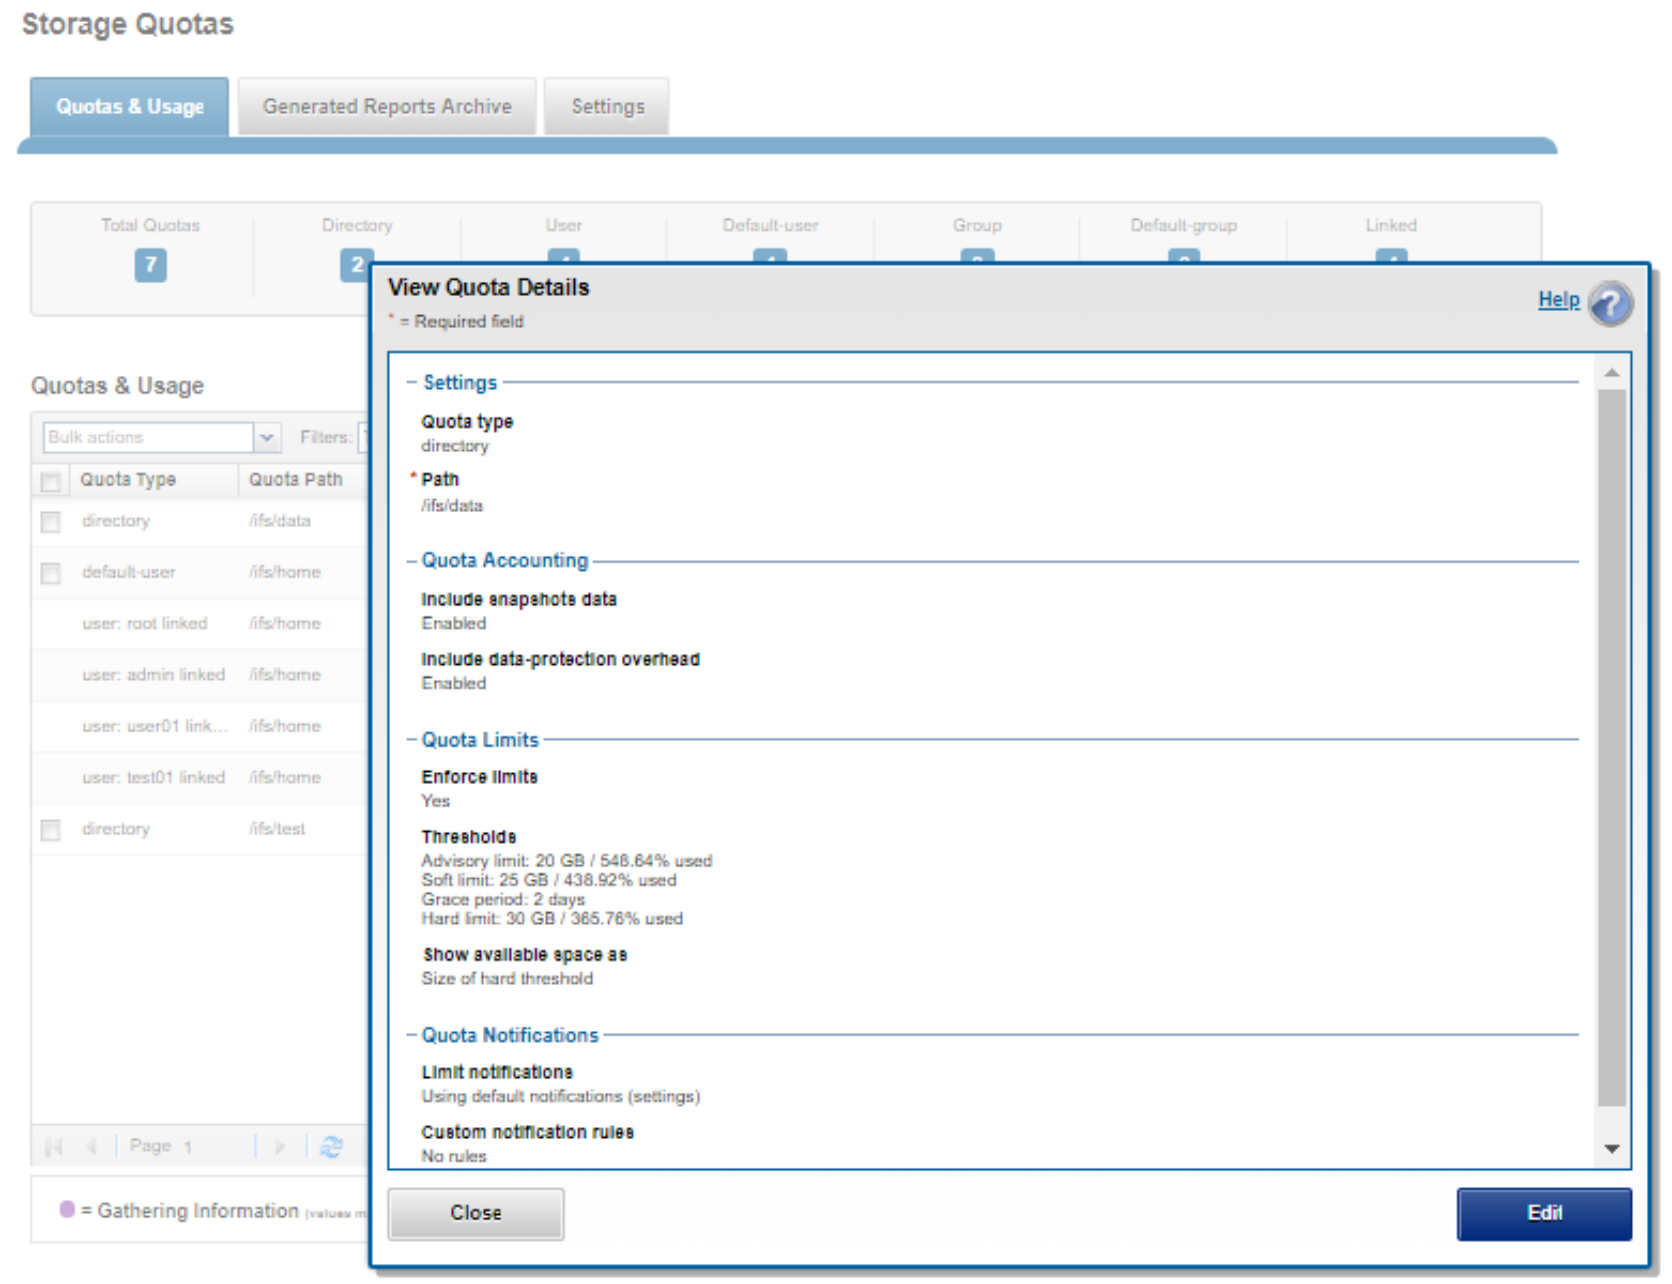 WebUI screenshot showing details of a configured quota.